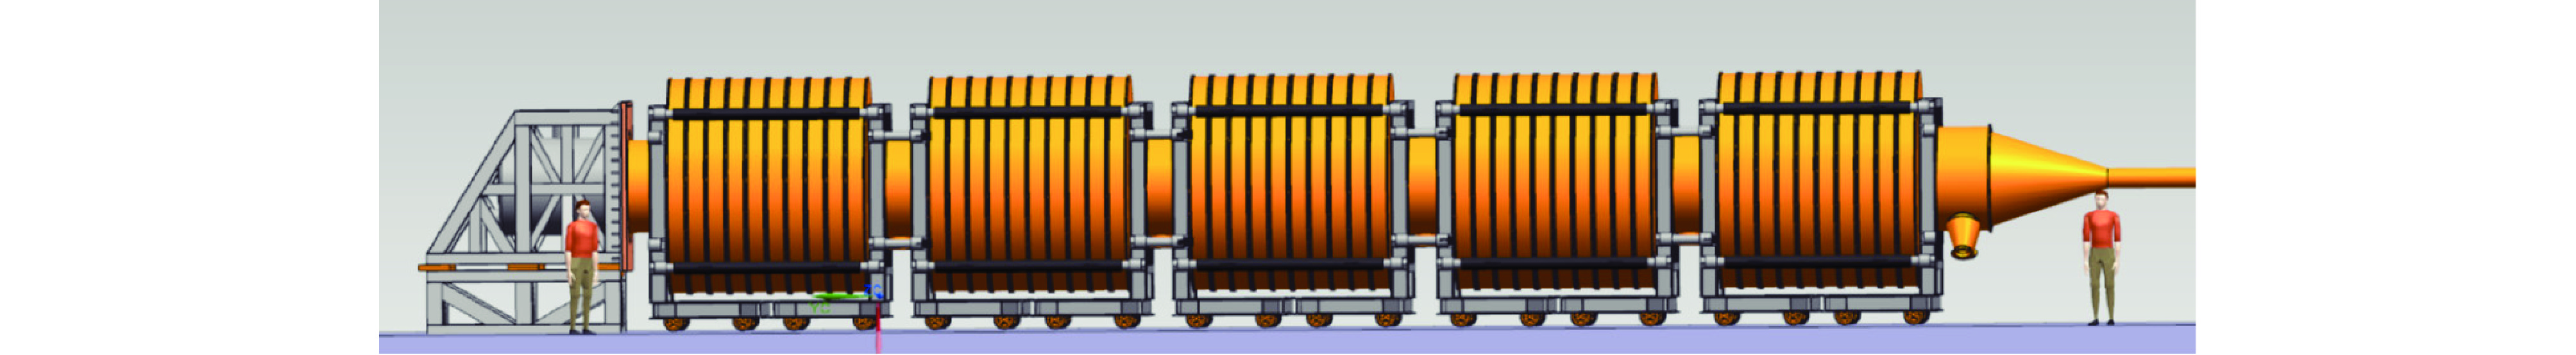 Schematic of the linear transformer driver module